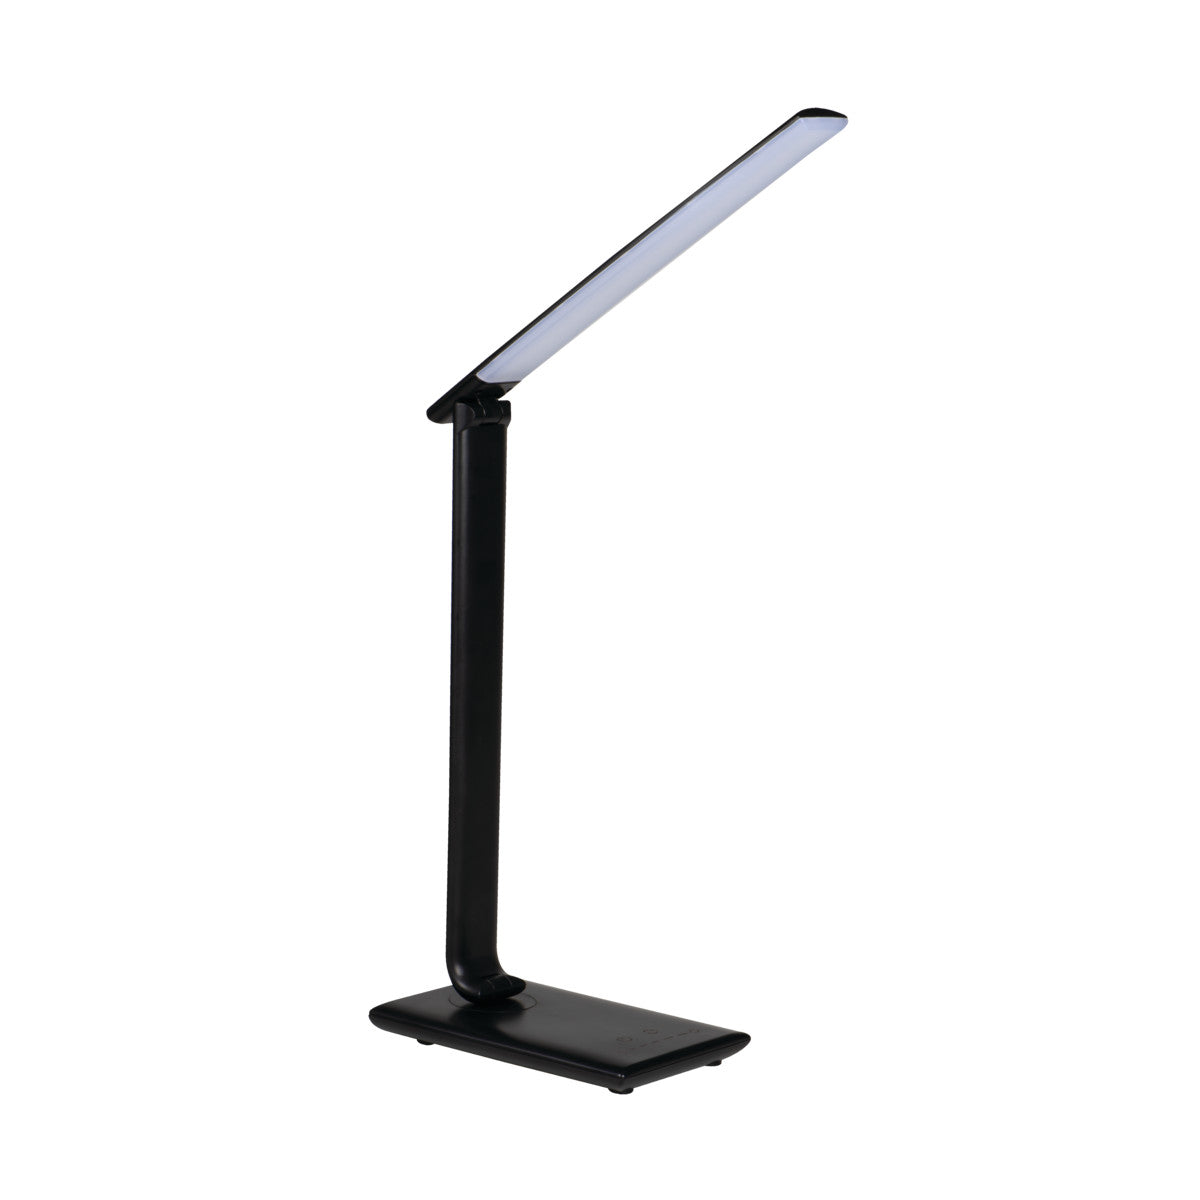 Kanlux PREDA LED 7W Desk Table Lamp Light CCT Adjustable with USB Port